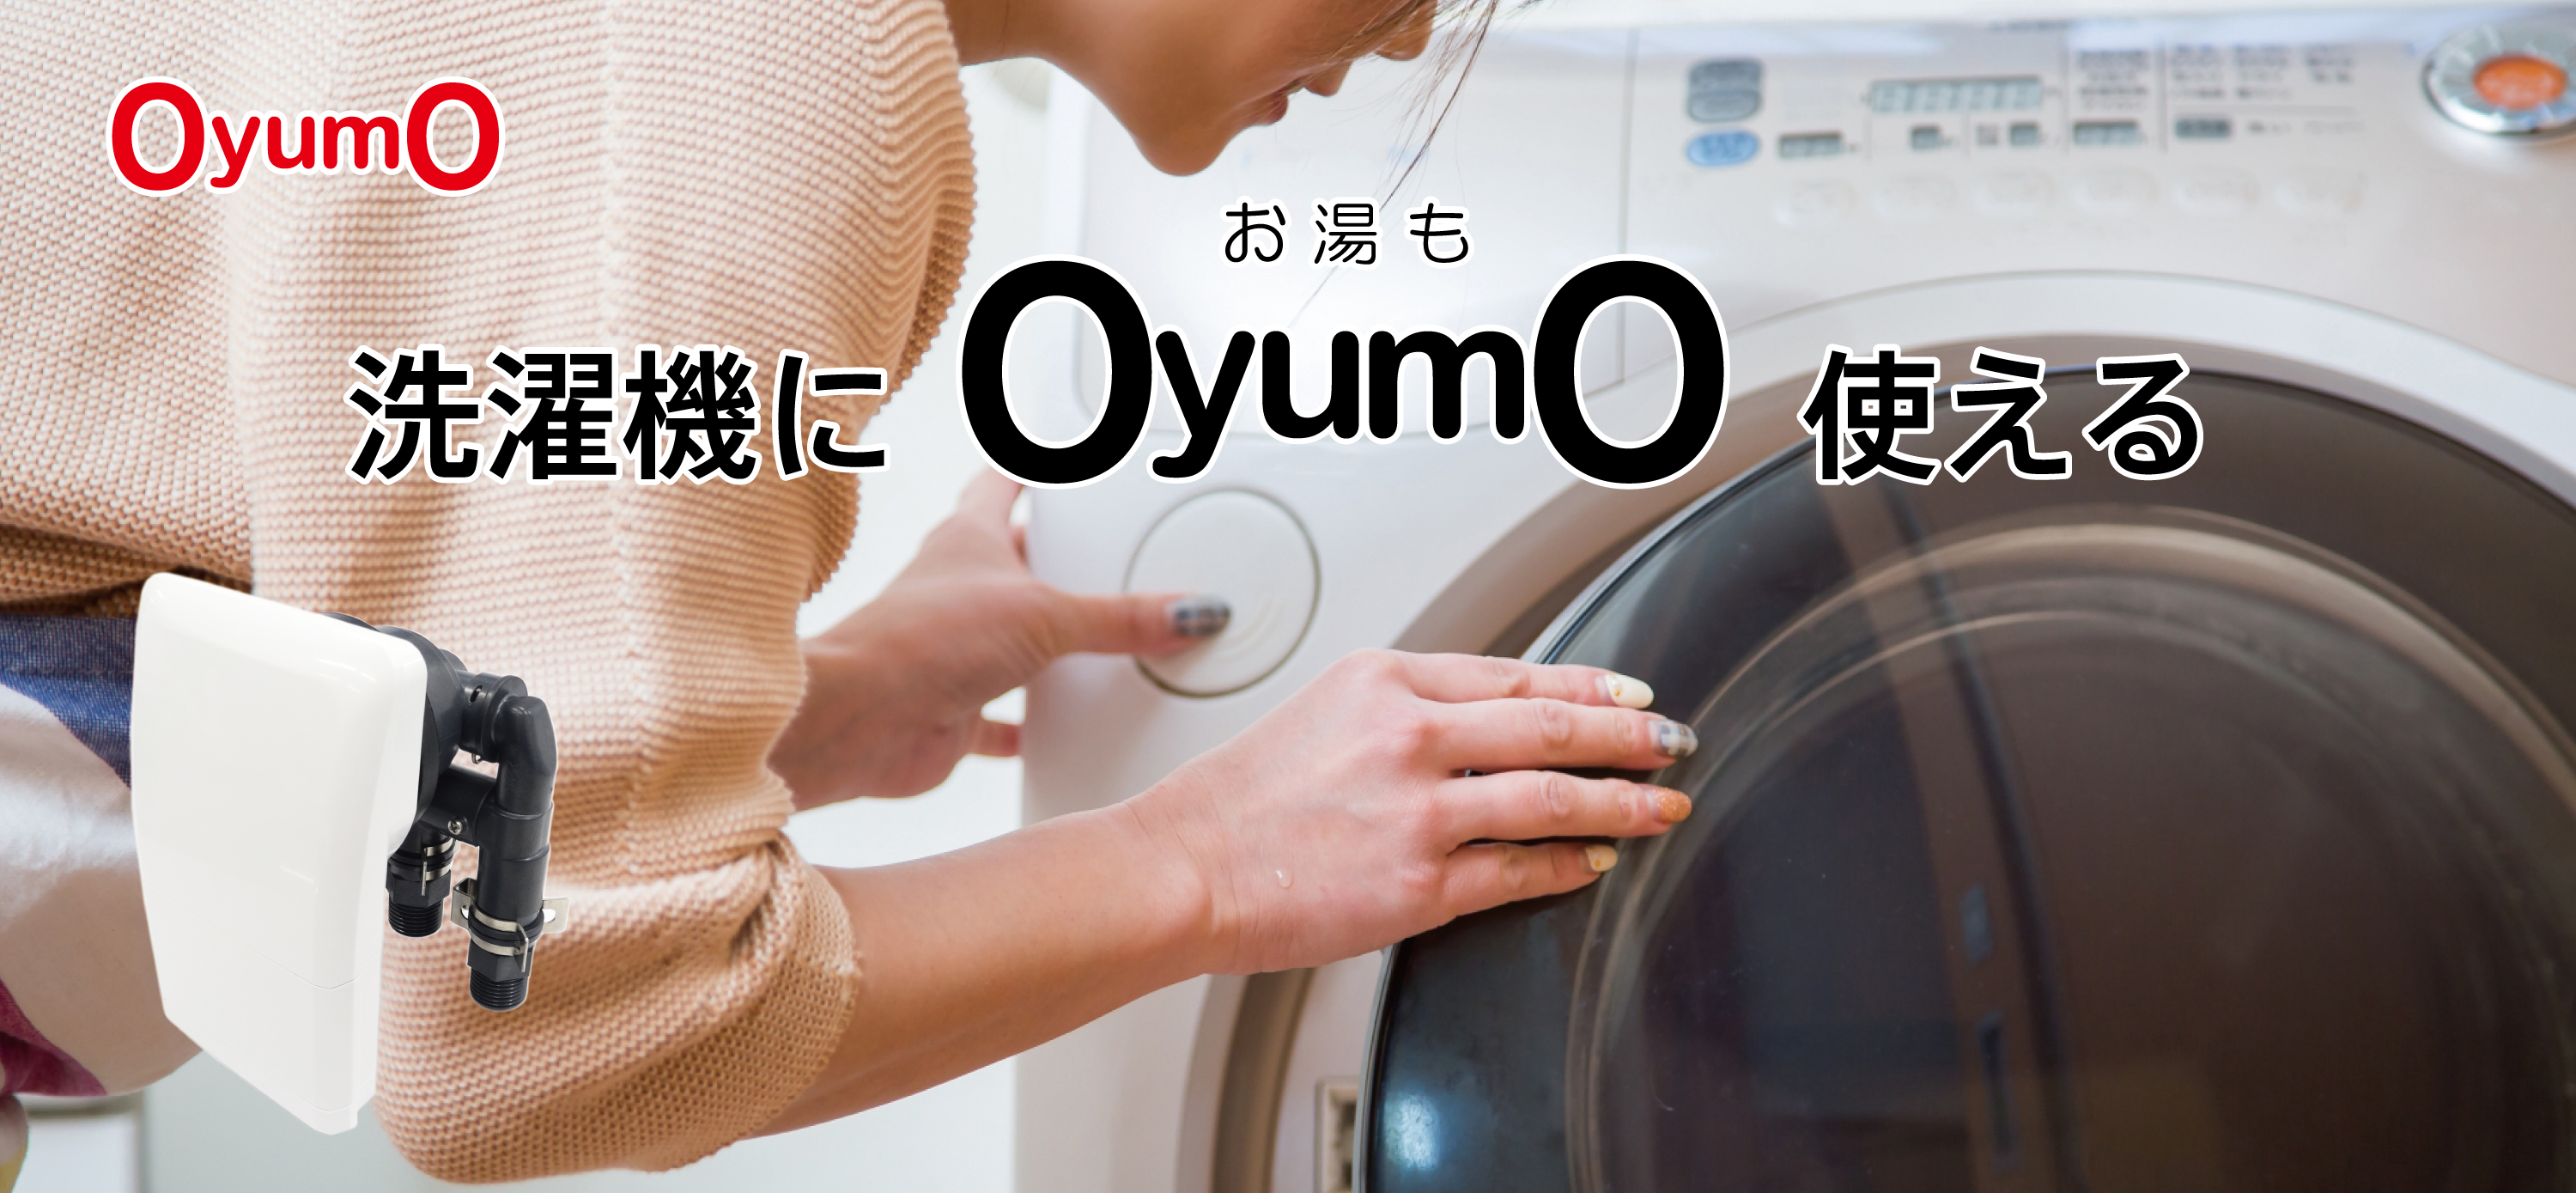 OyumO